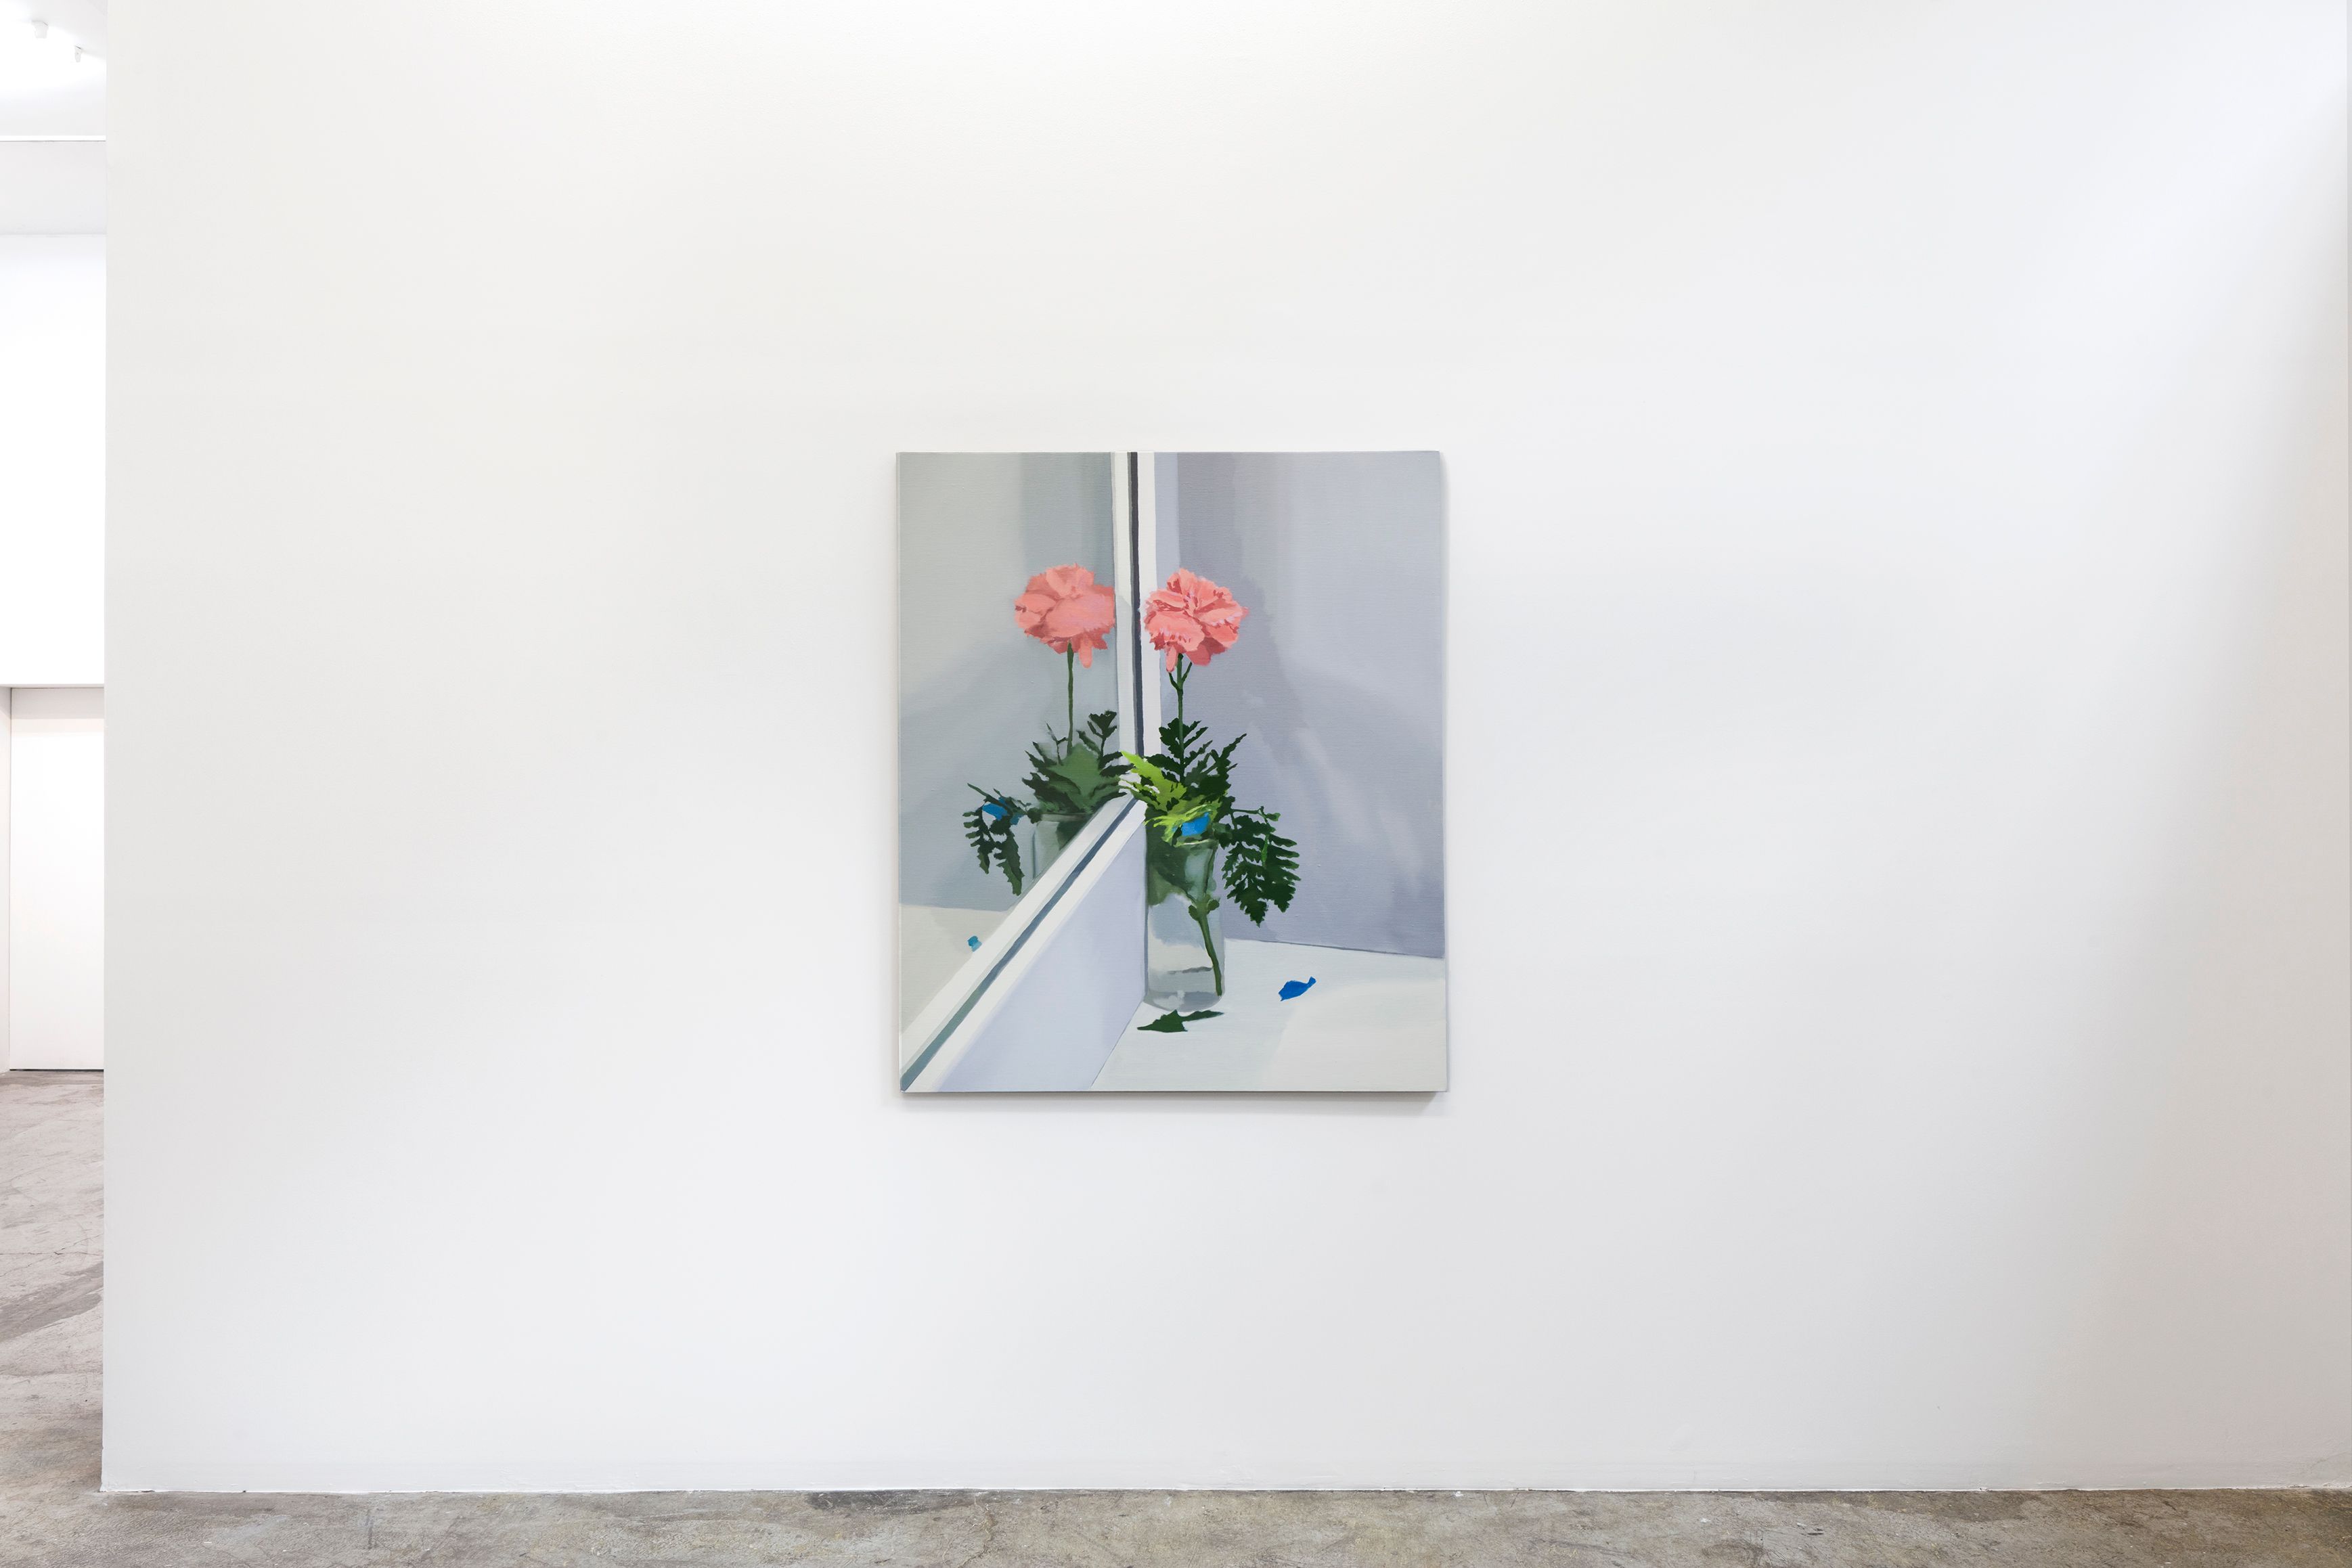 Roger White, "Pink flower and a mirror", 2023. Vista de instalación en Labor.